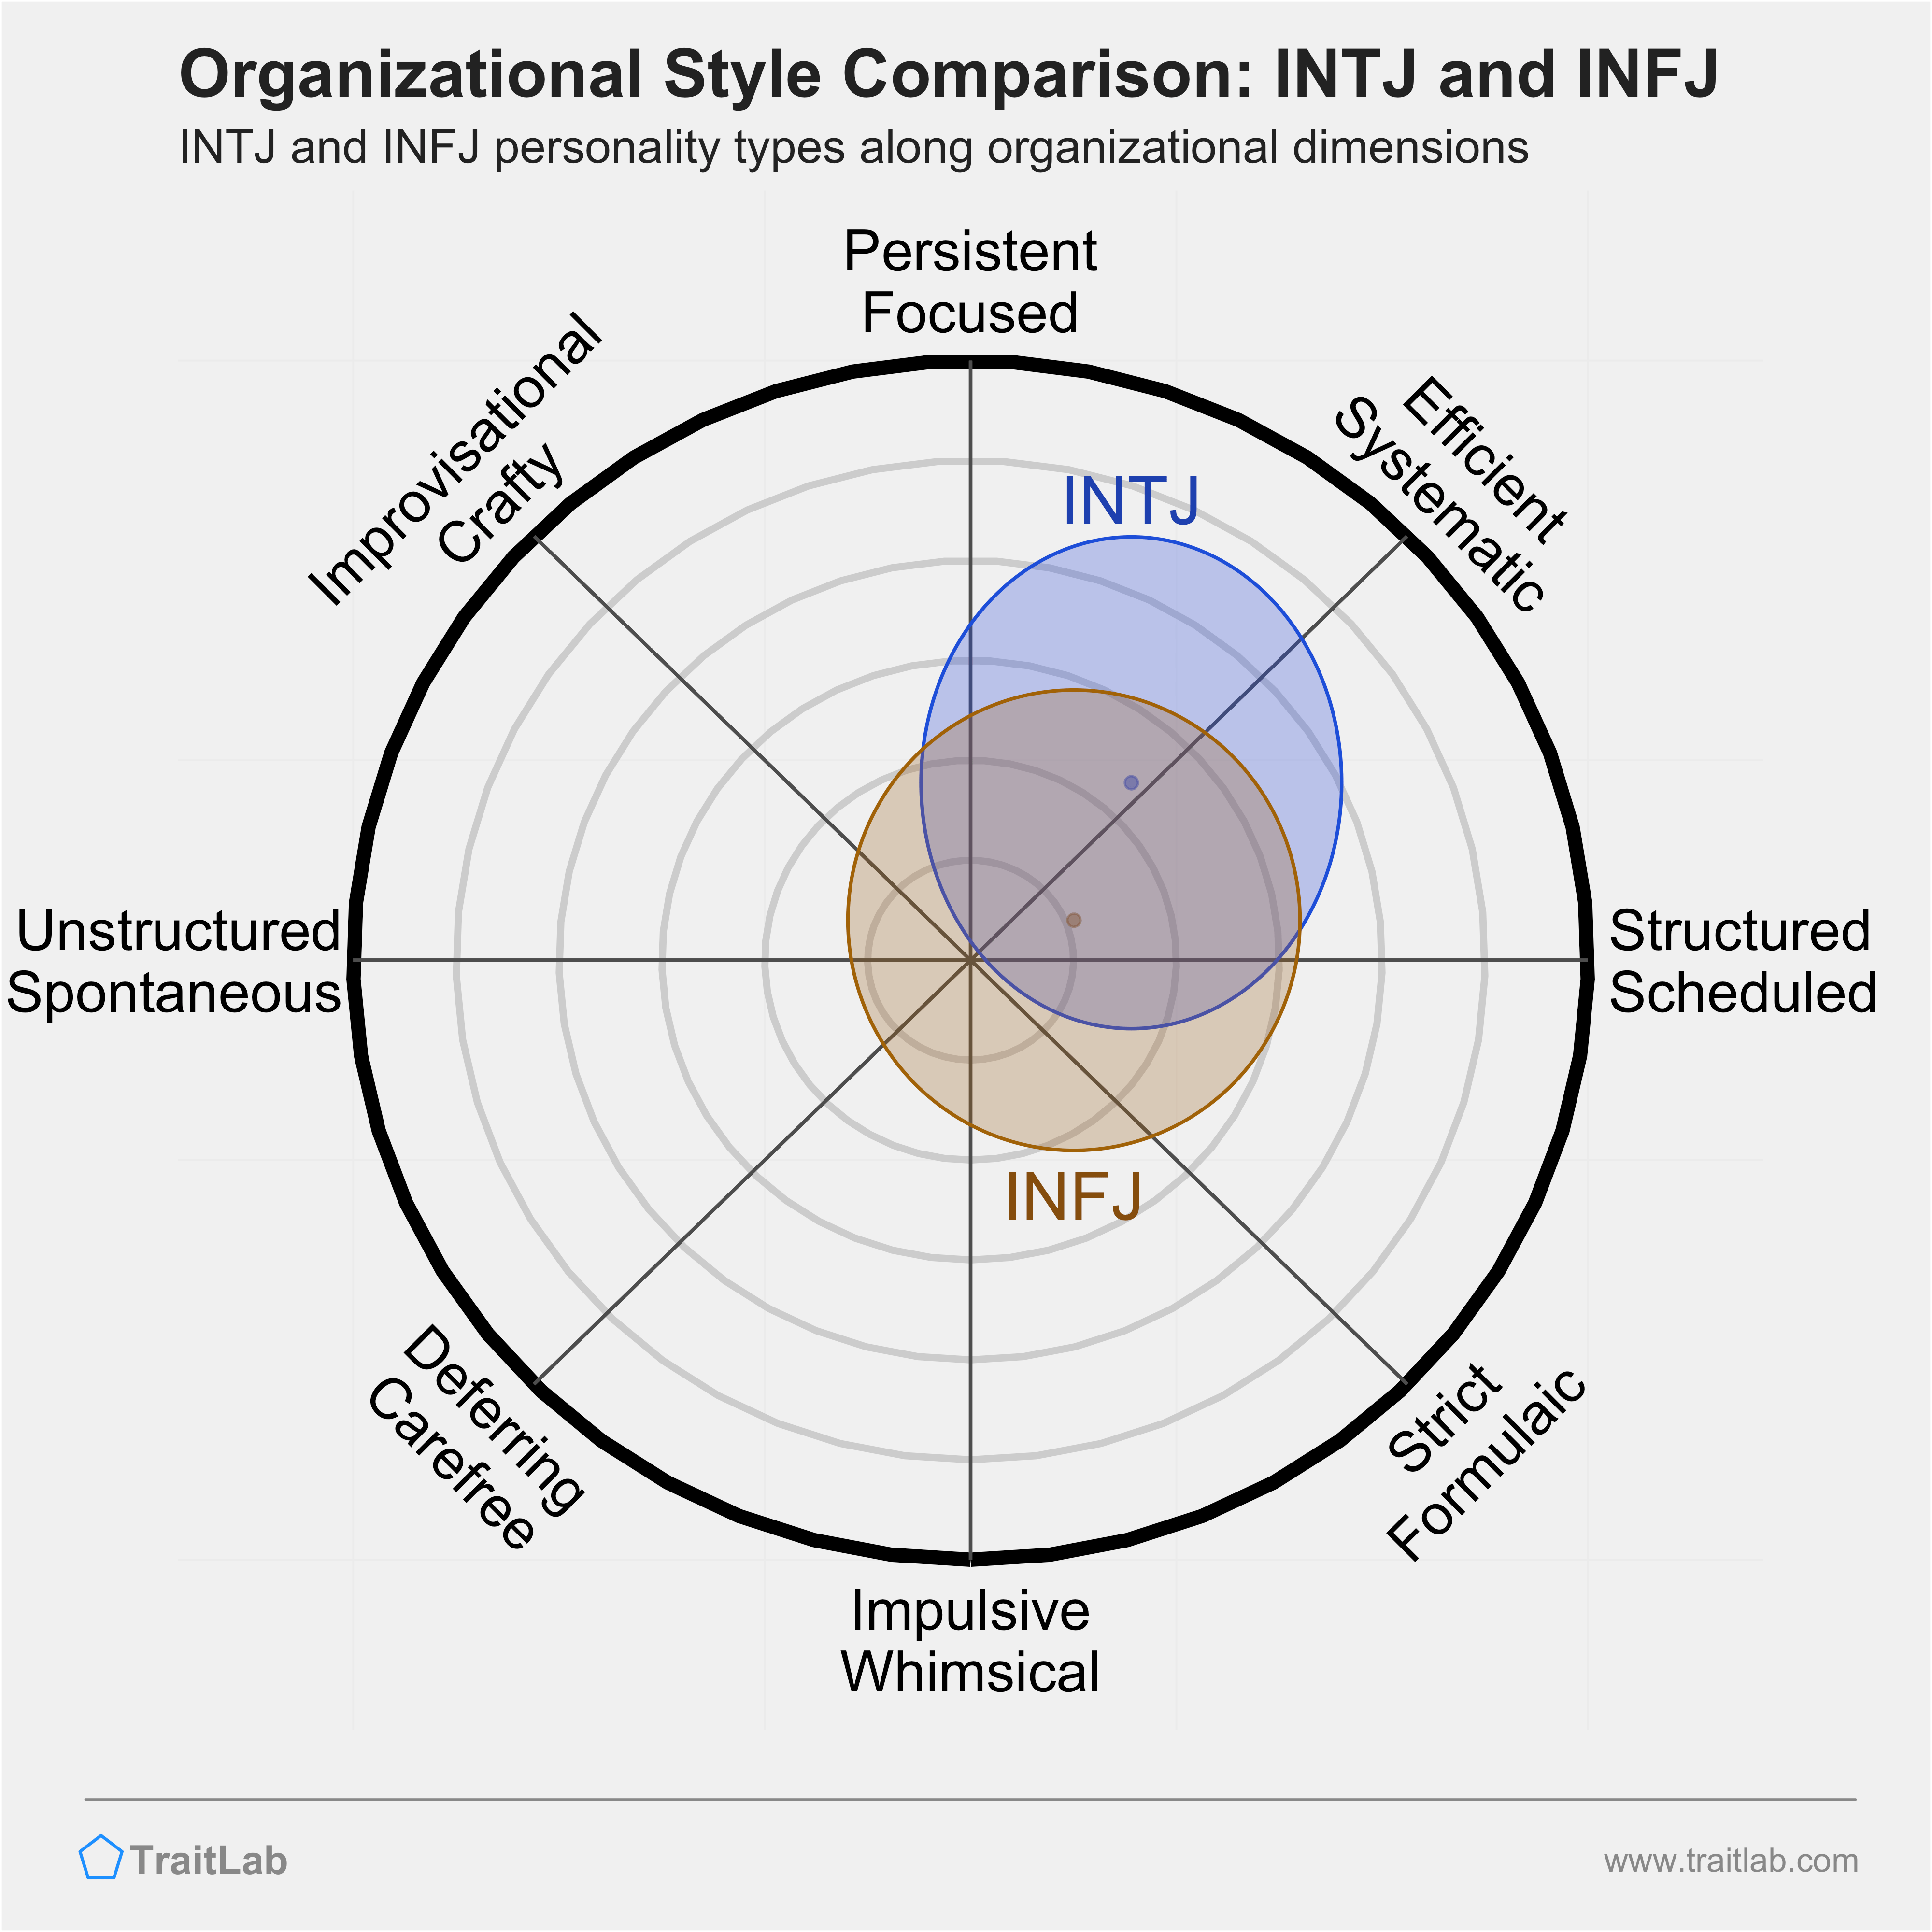 INTJ and INFJ comparison across organizational dimensions